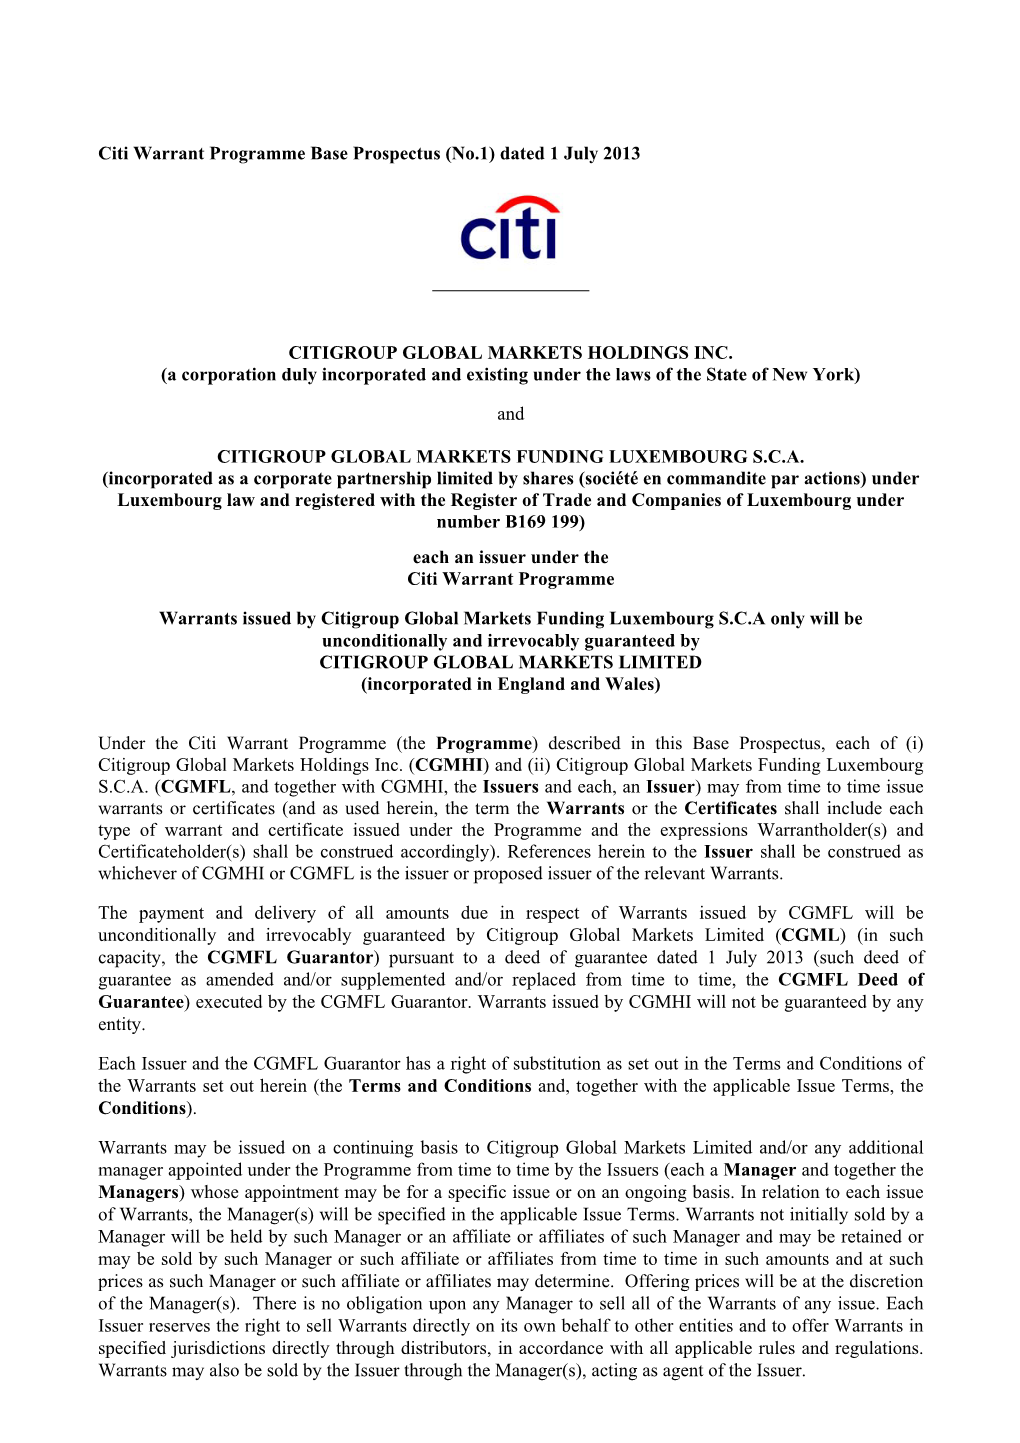 Citi Warrant Programme Base Prospectus (No.1) Dated 1 July 2013